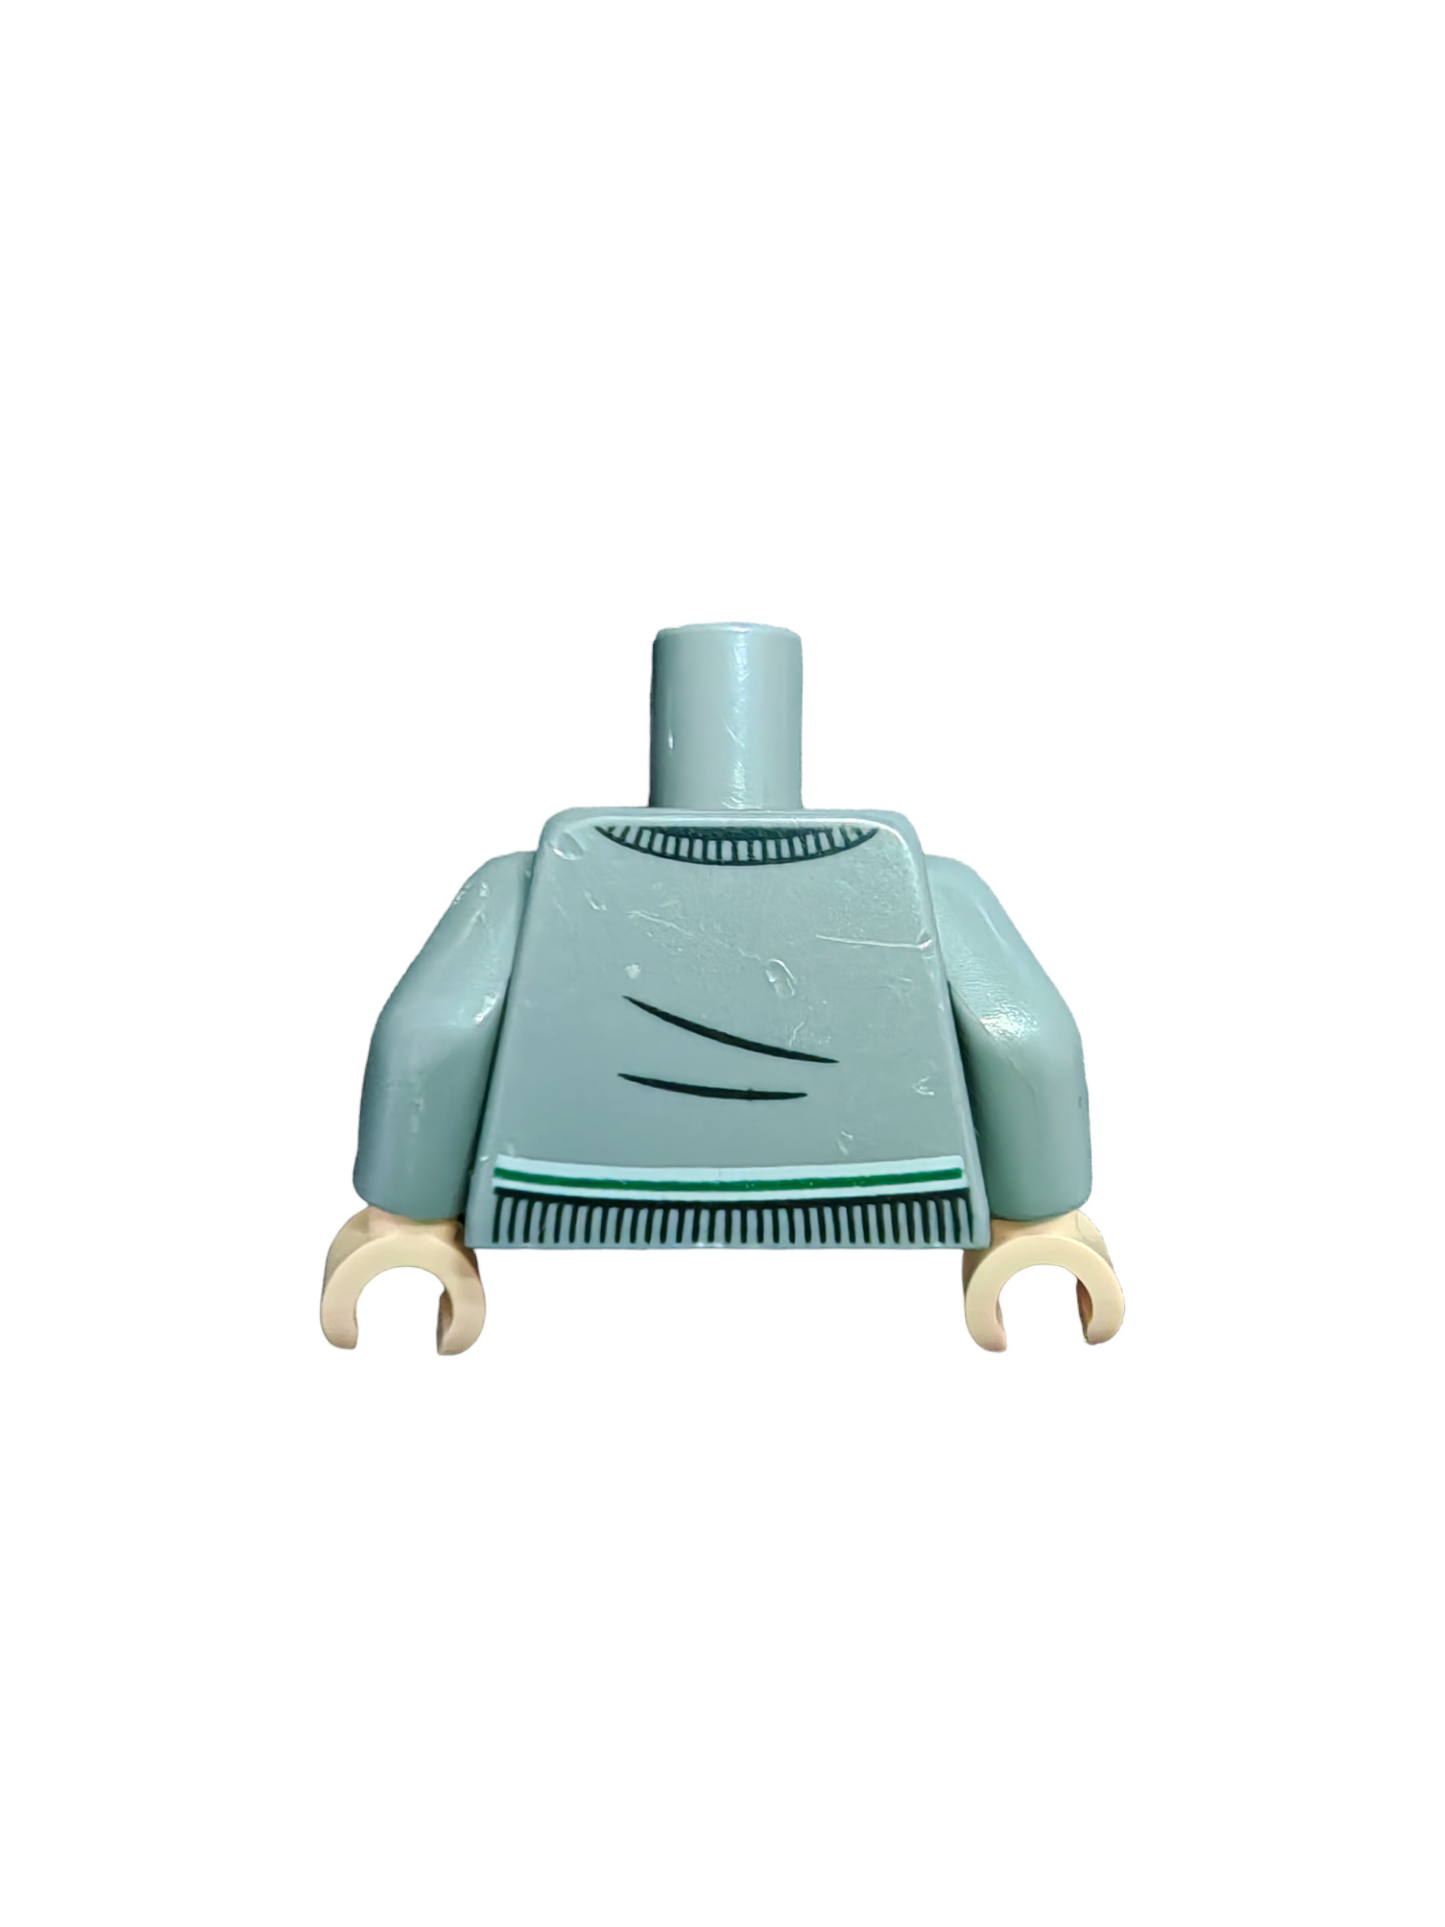 LEGO PRELOVED Minifigure Torso, Harry Potter V-Neck Sweater, Green and White Tie (Slytherin) - UB1449